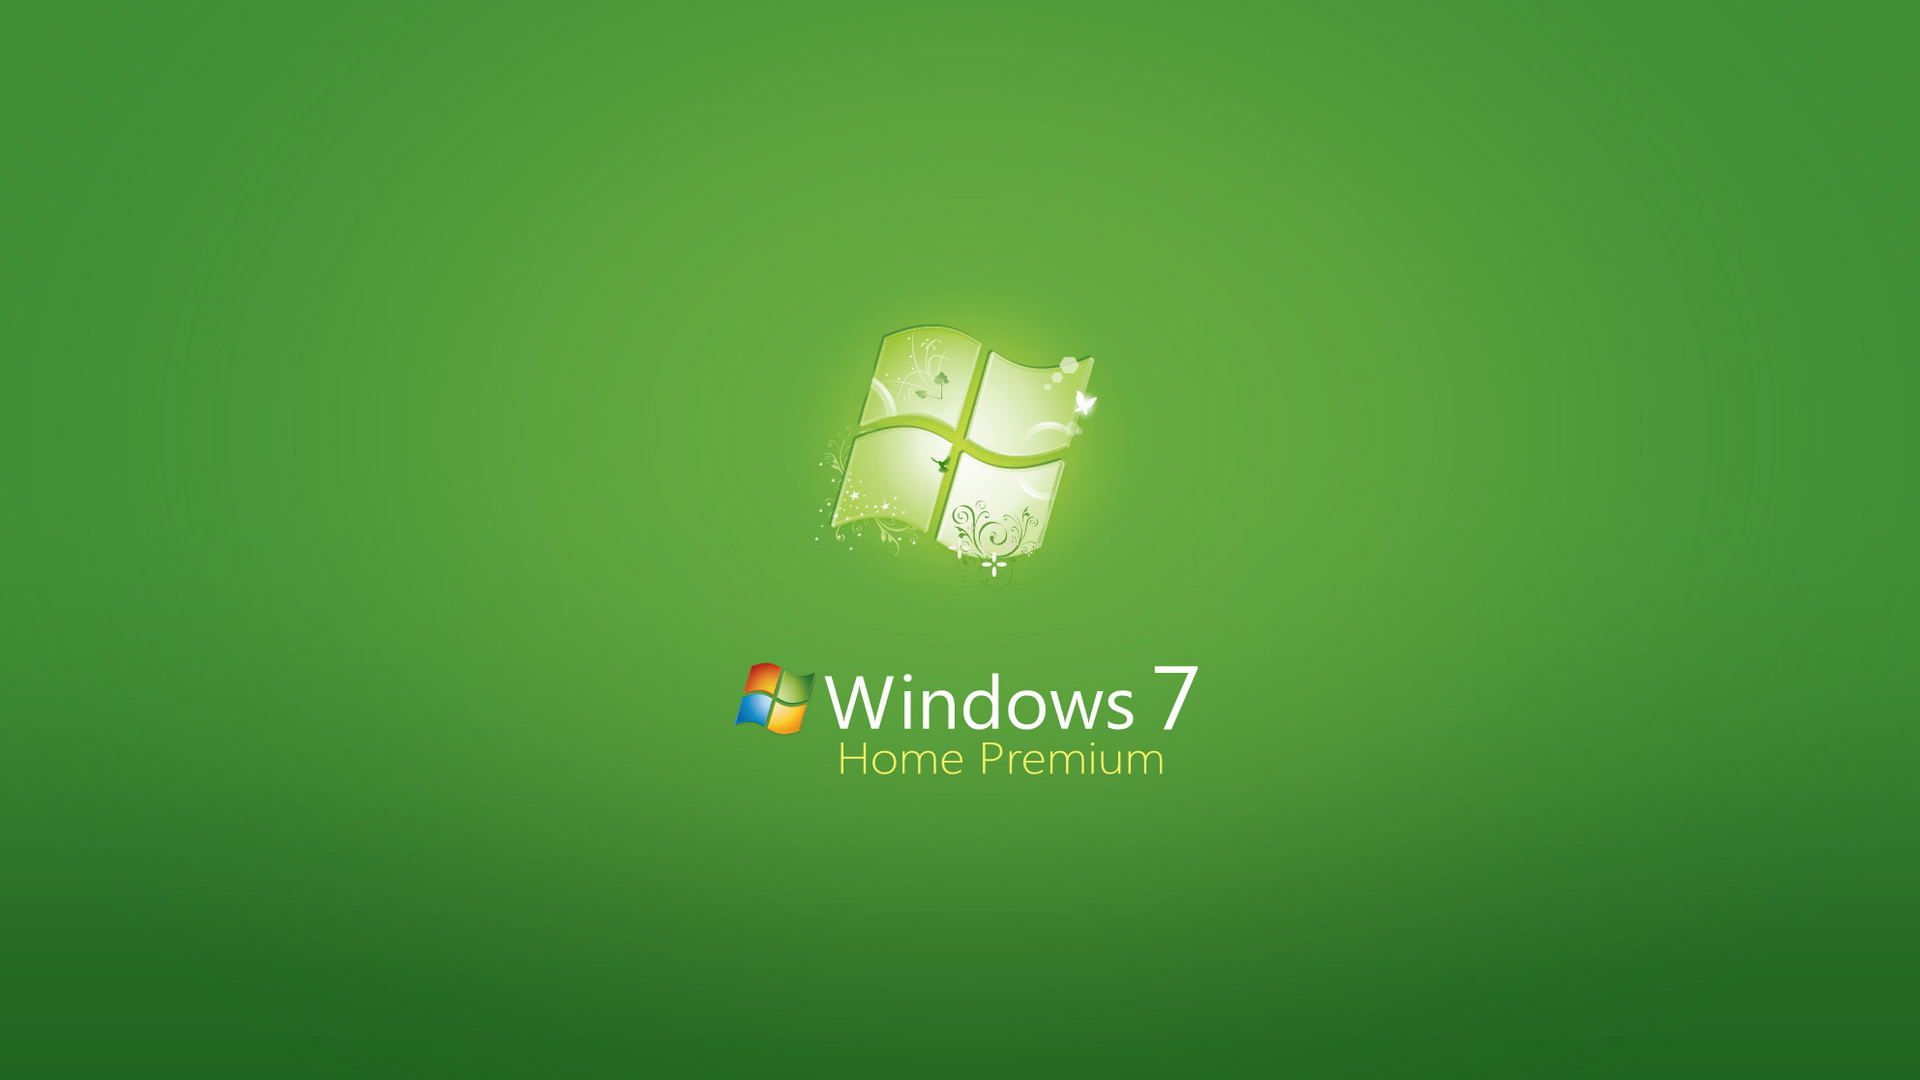 windows, brands, logos, background, green